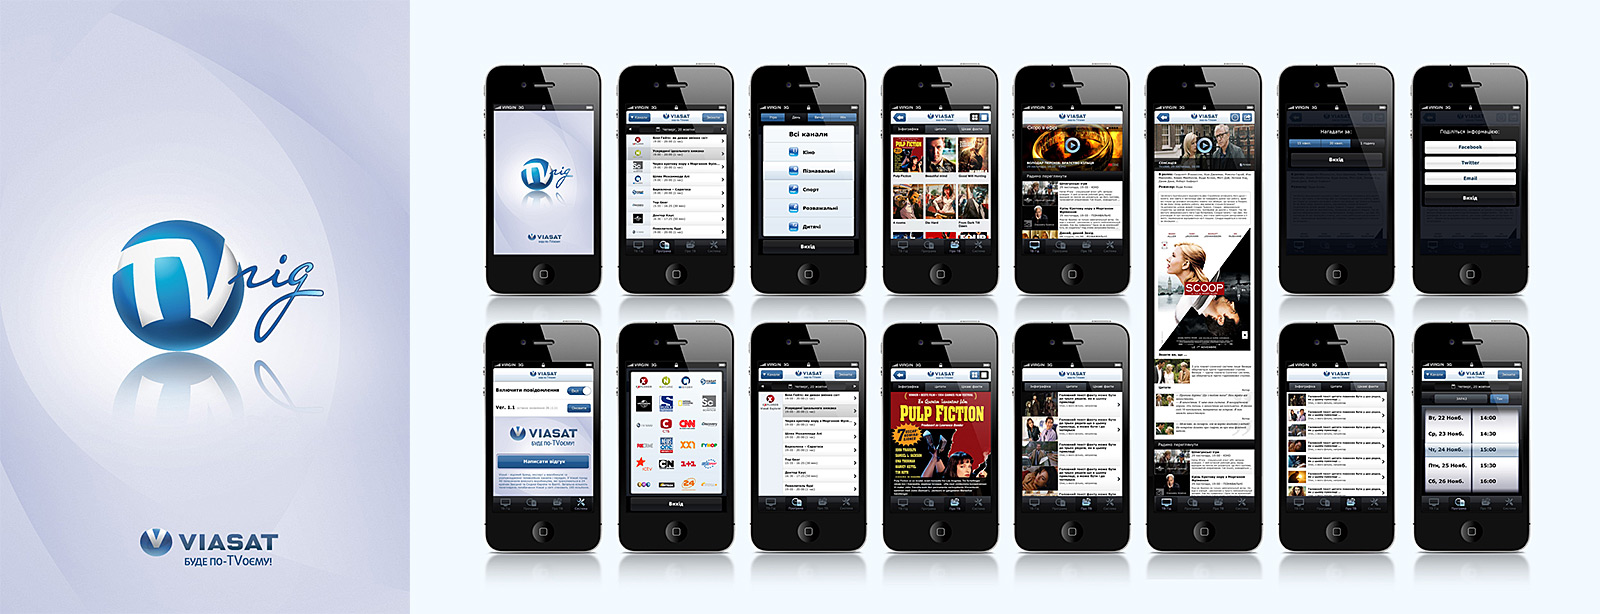 iPhone-приложение TV-гид